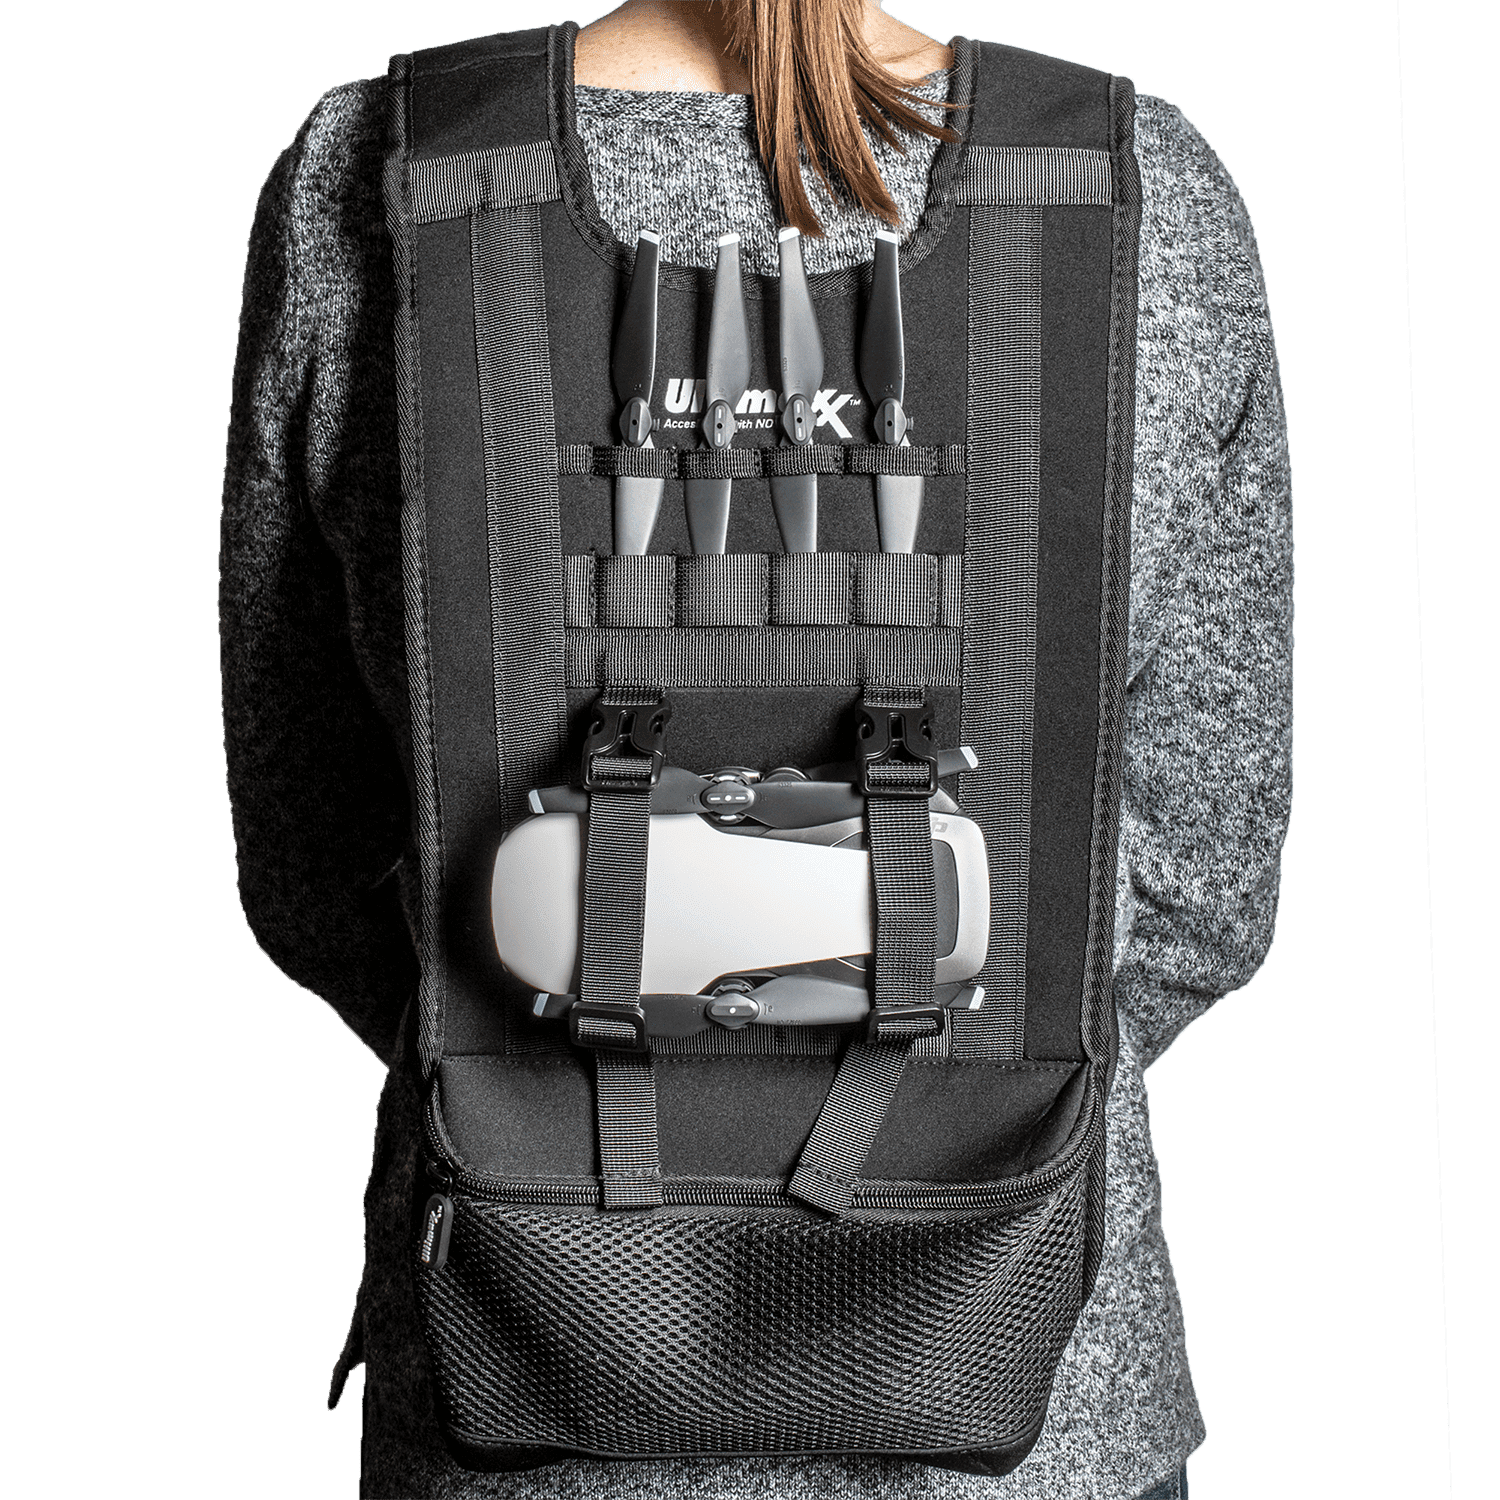 Mavic backpack vest